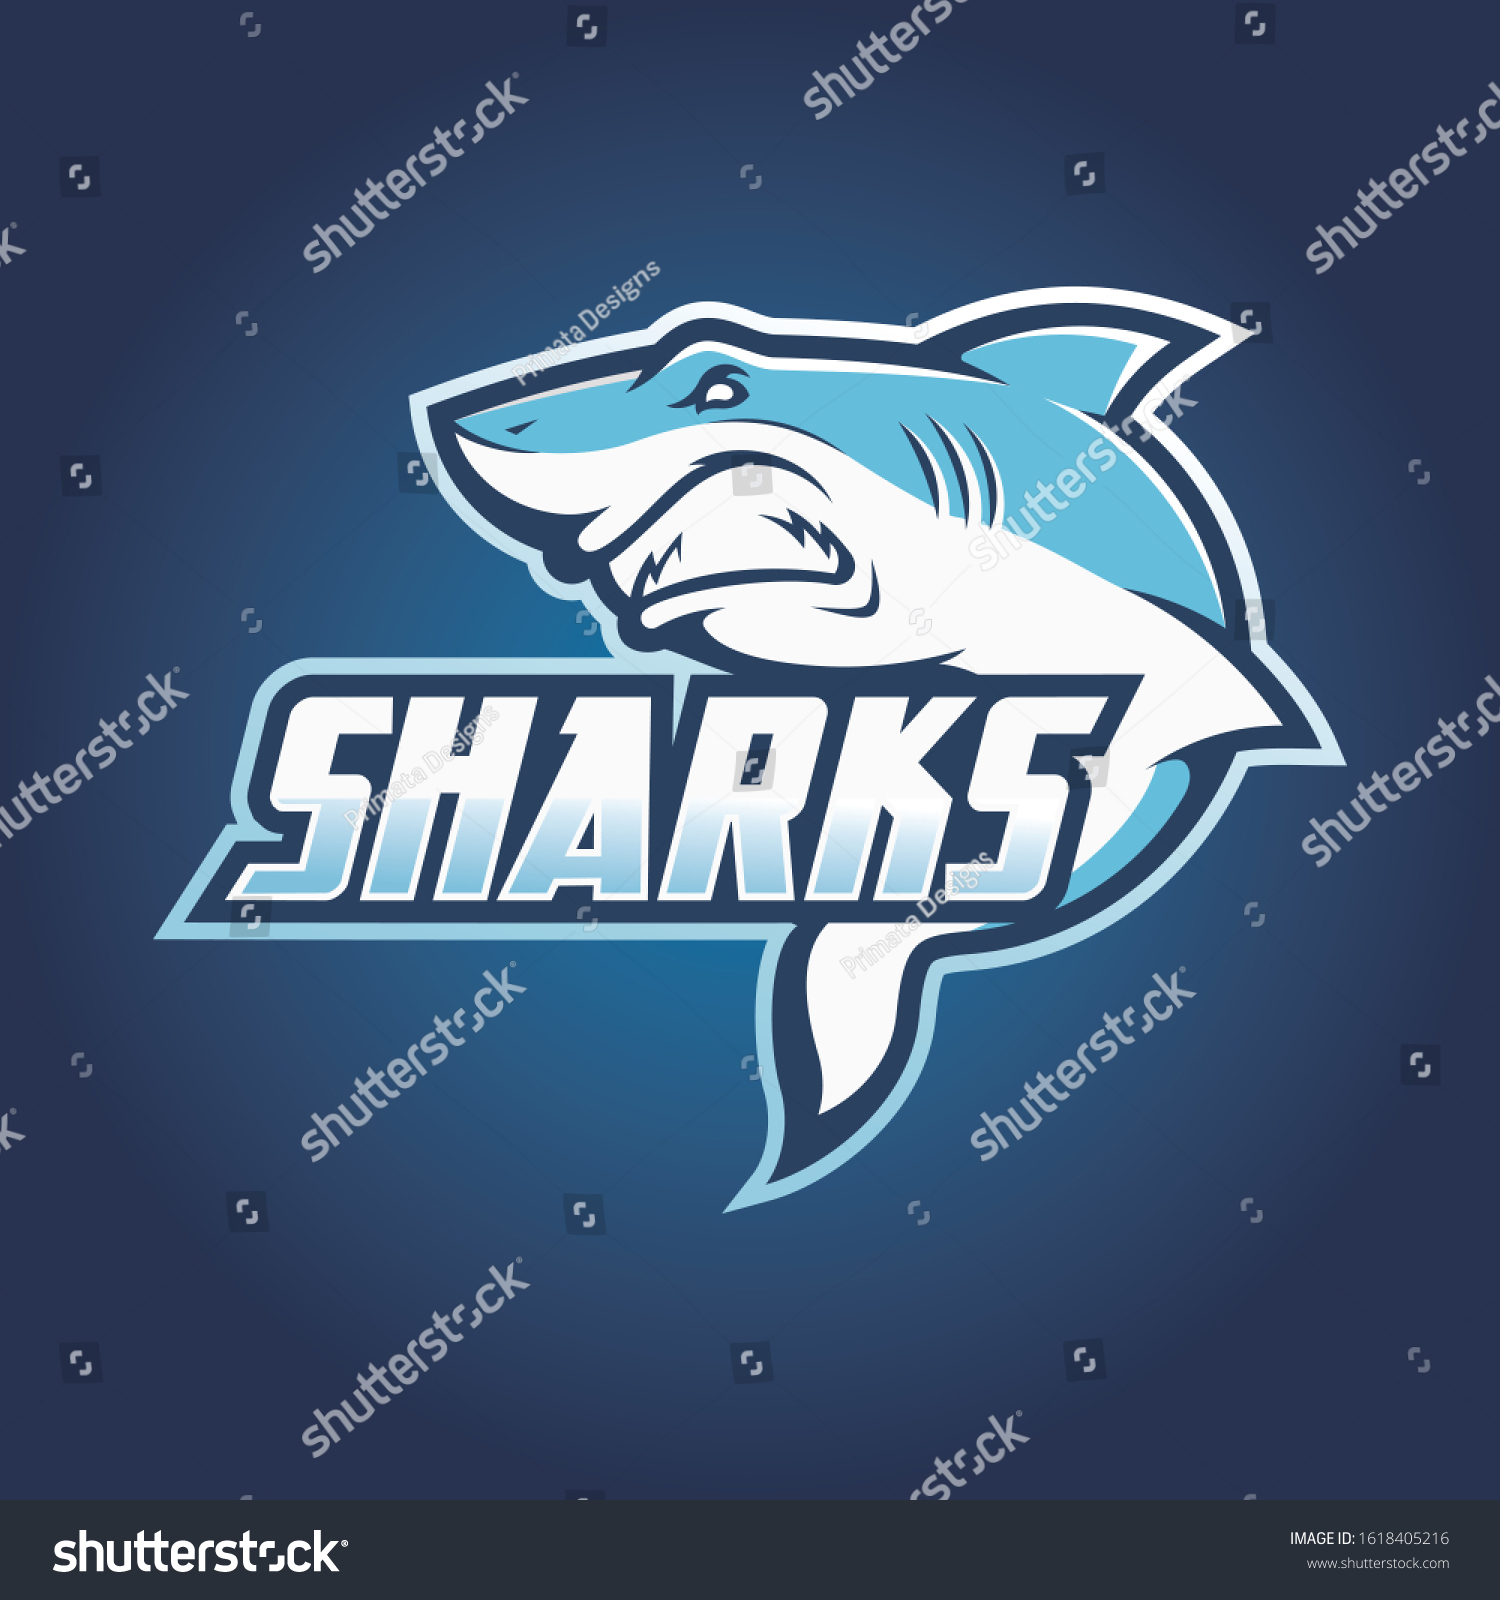 Sharks sport logo vector design - Royalty Free Stock Vector 1618405216 ...